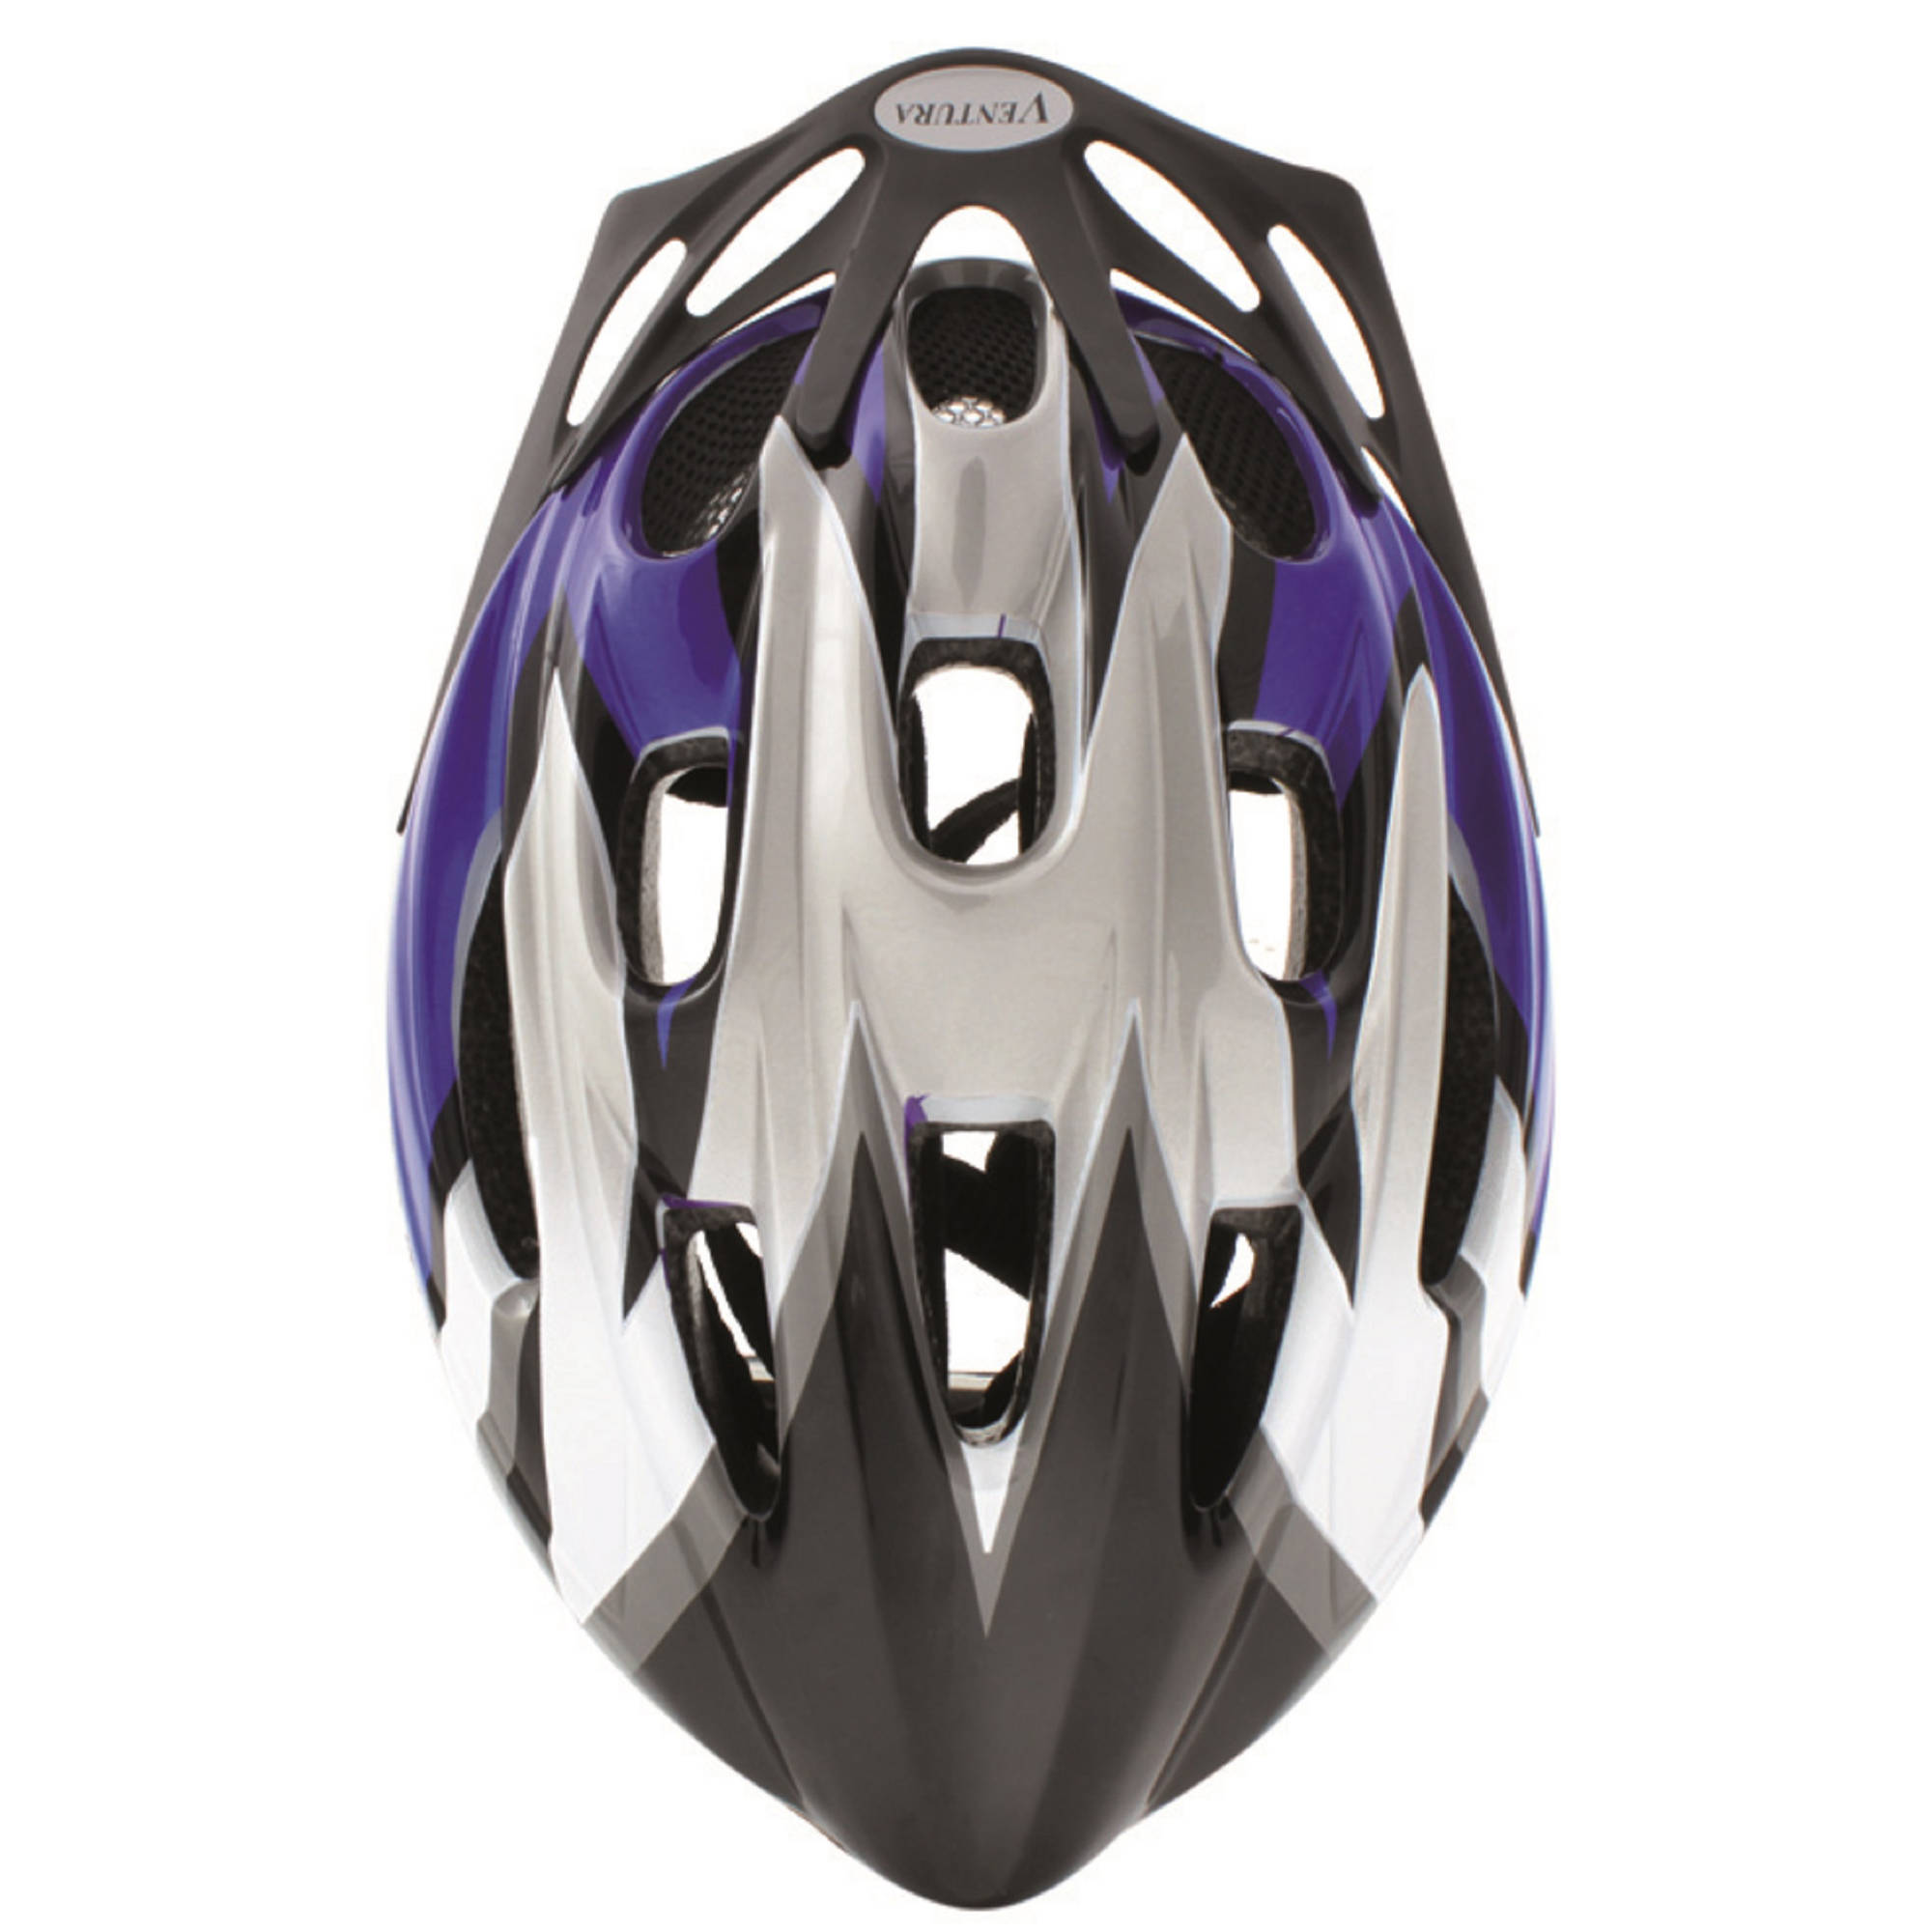 Ventura Reflective Sport Helmet L (58-61 cm) - image 3 of 4